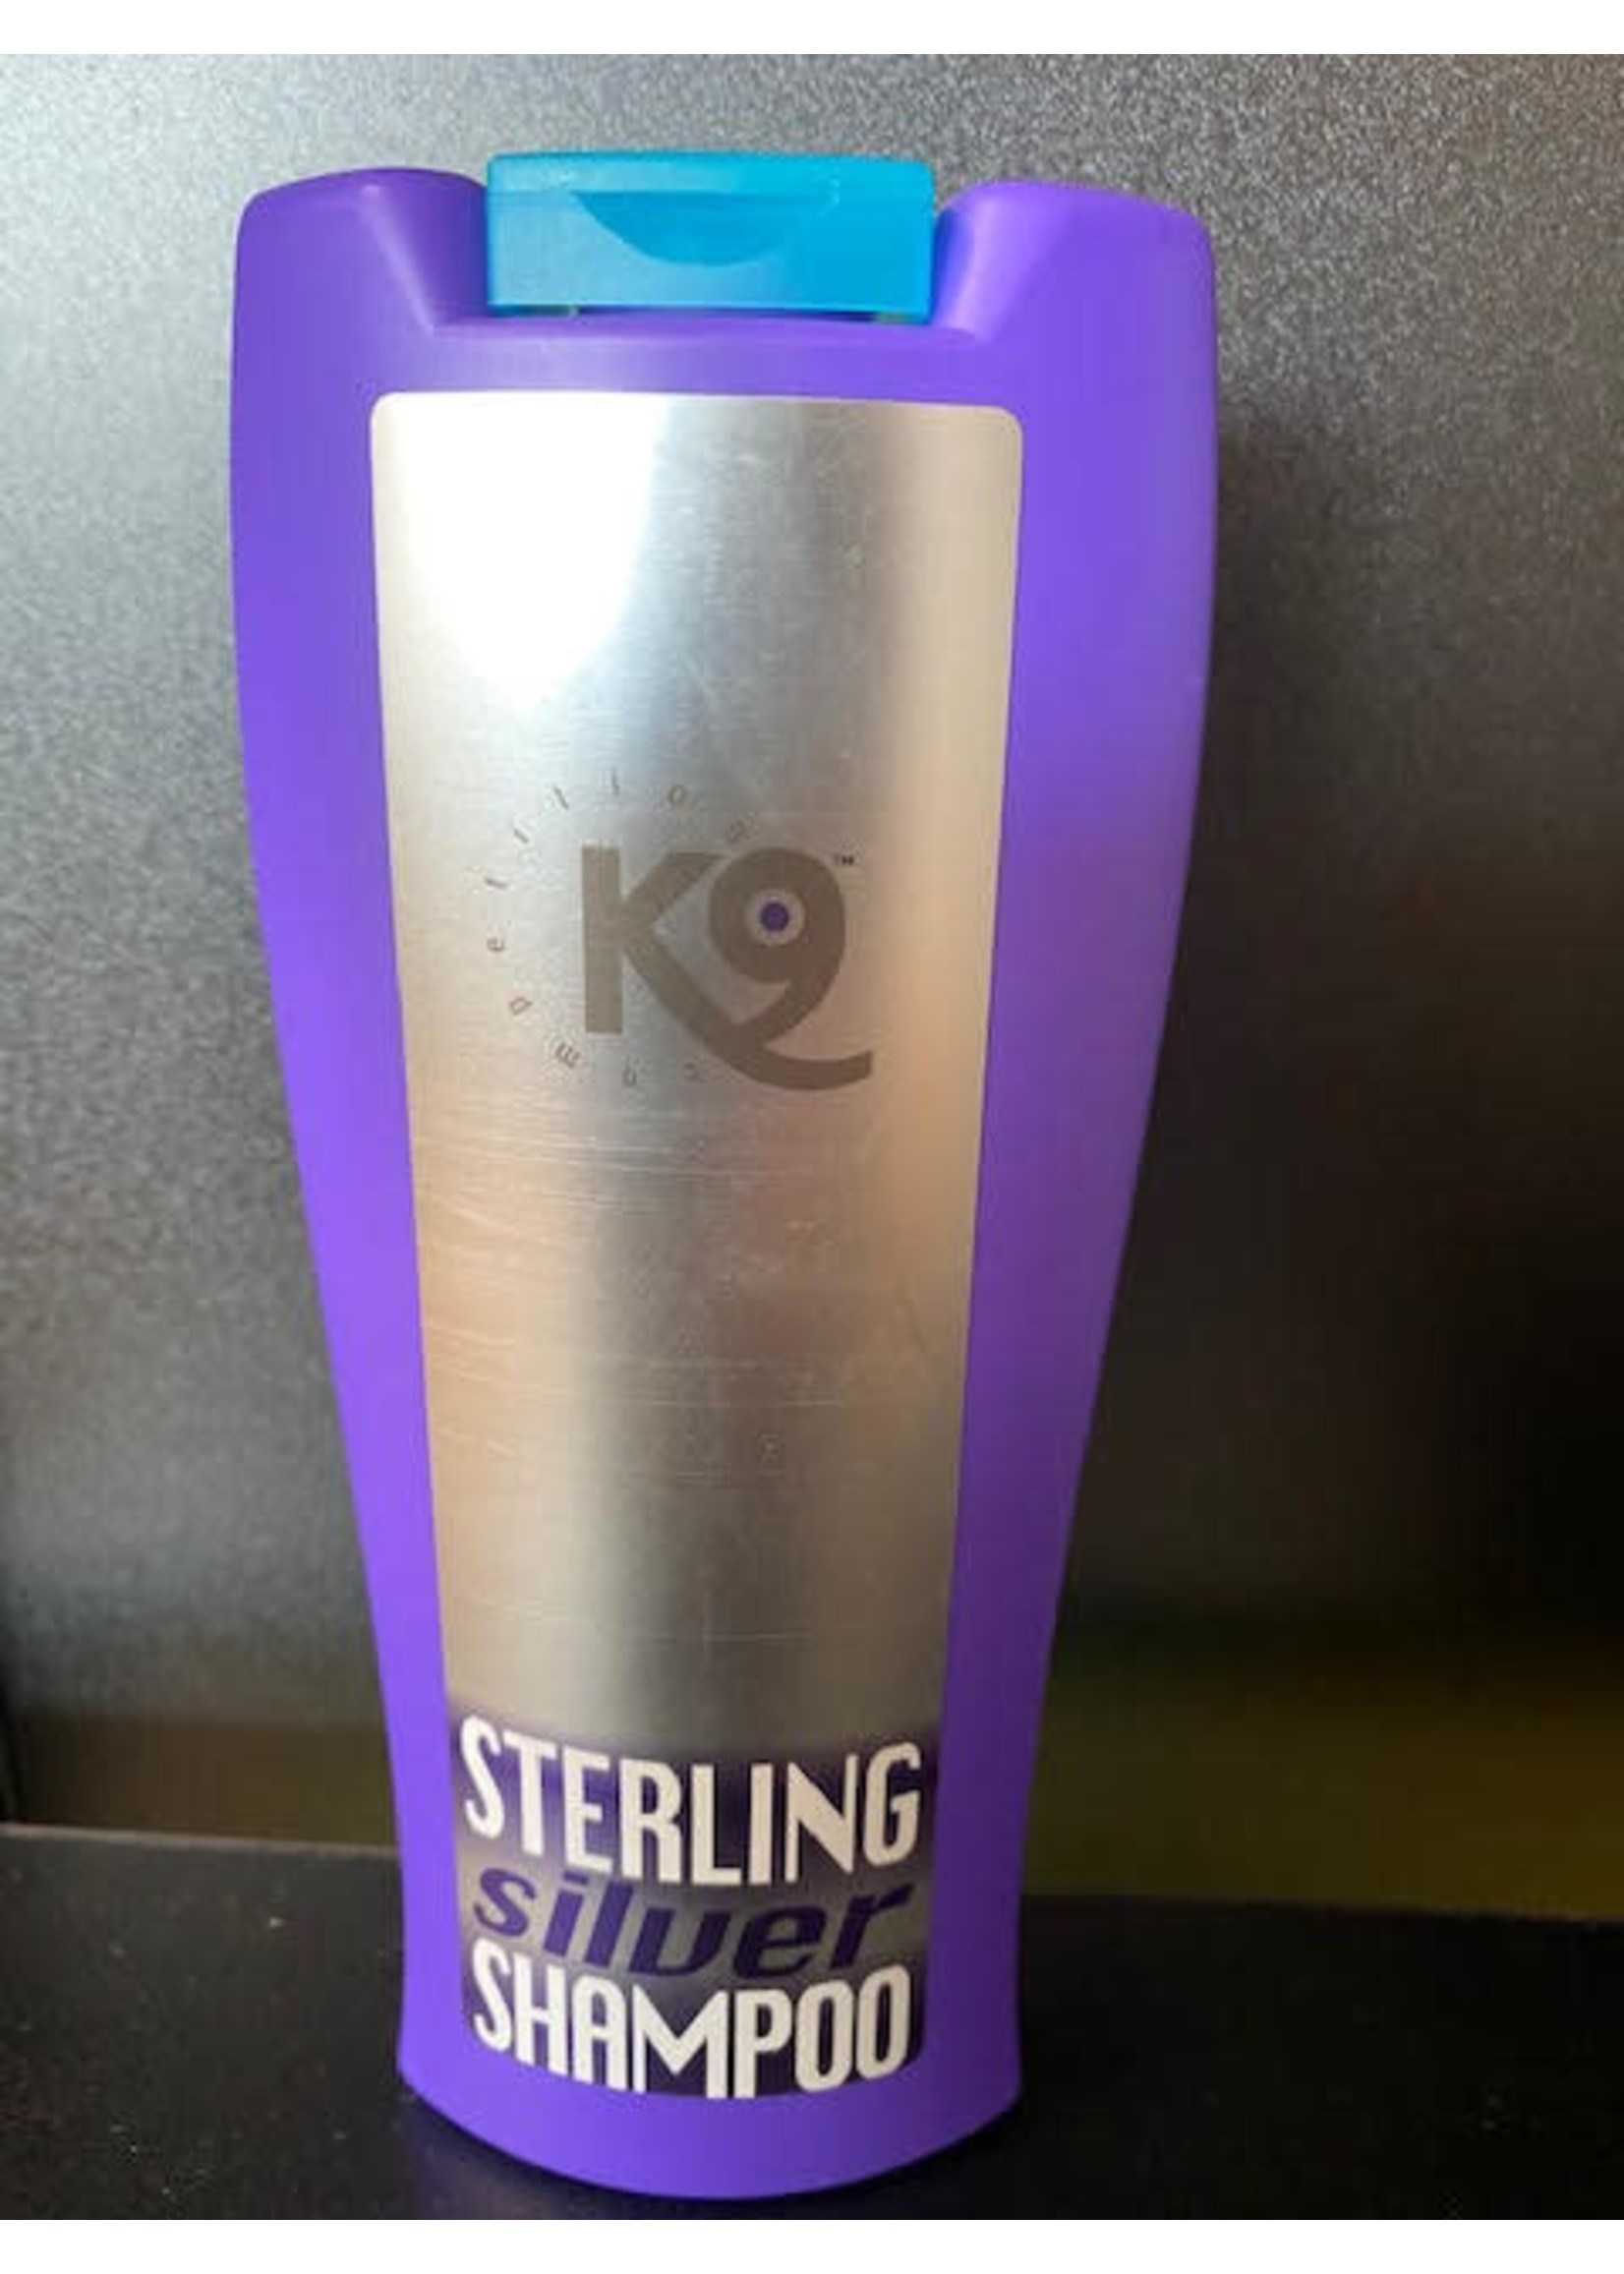 K9 K9 Sterling Silver Shampoo